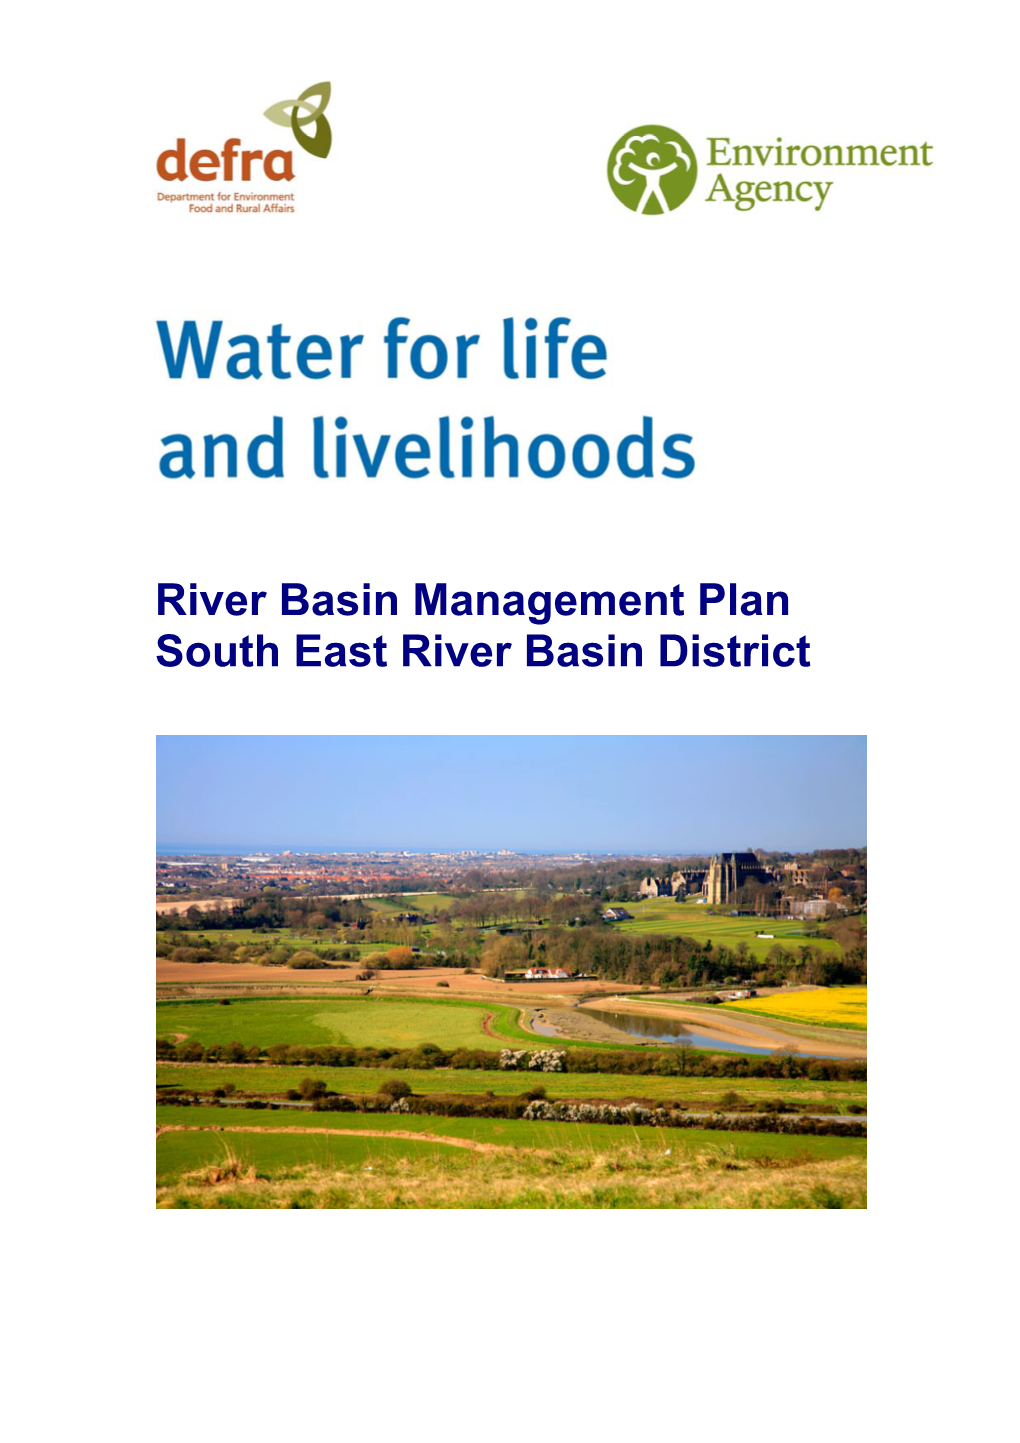 River Basin Management Plan South East River Basin District